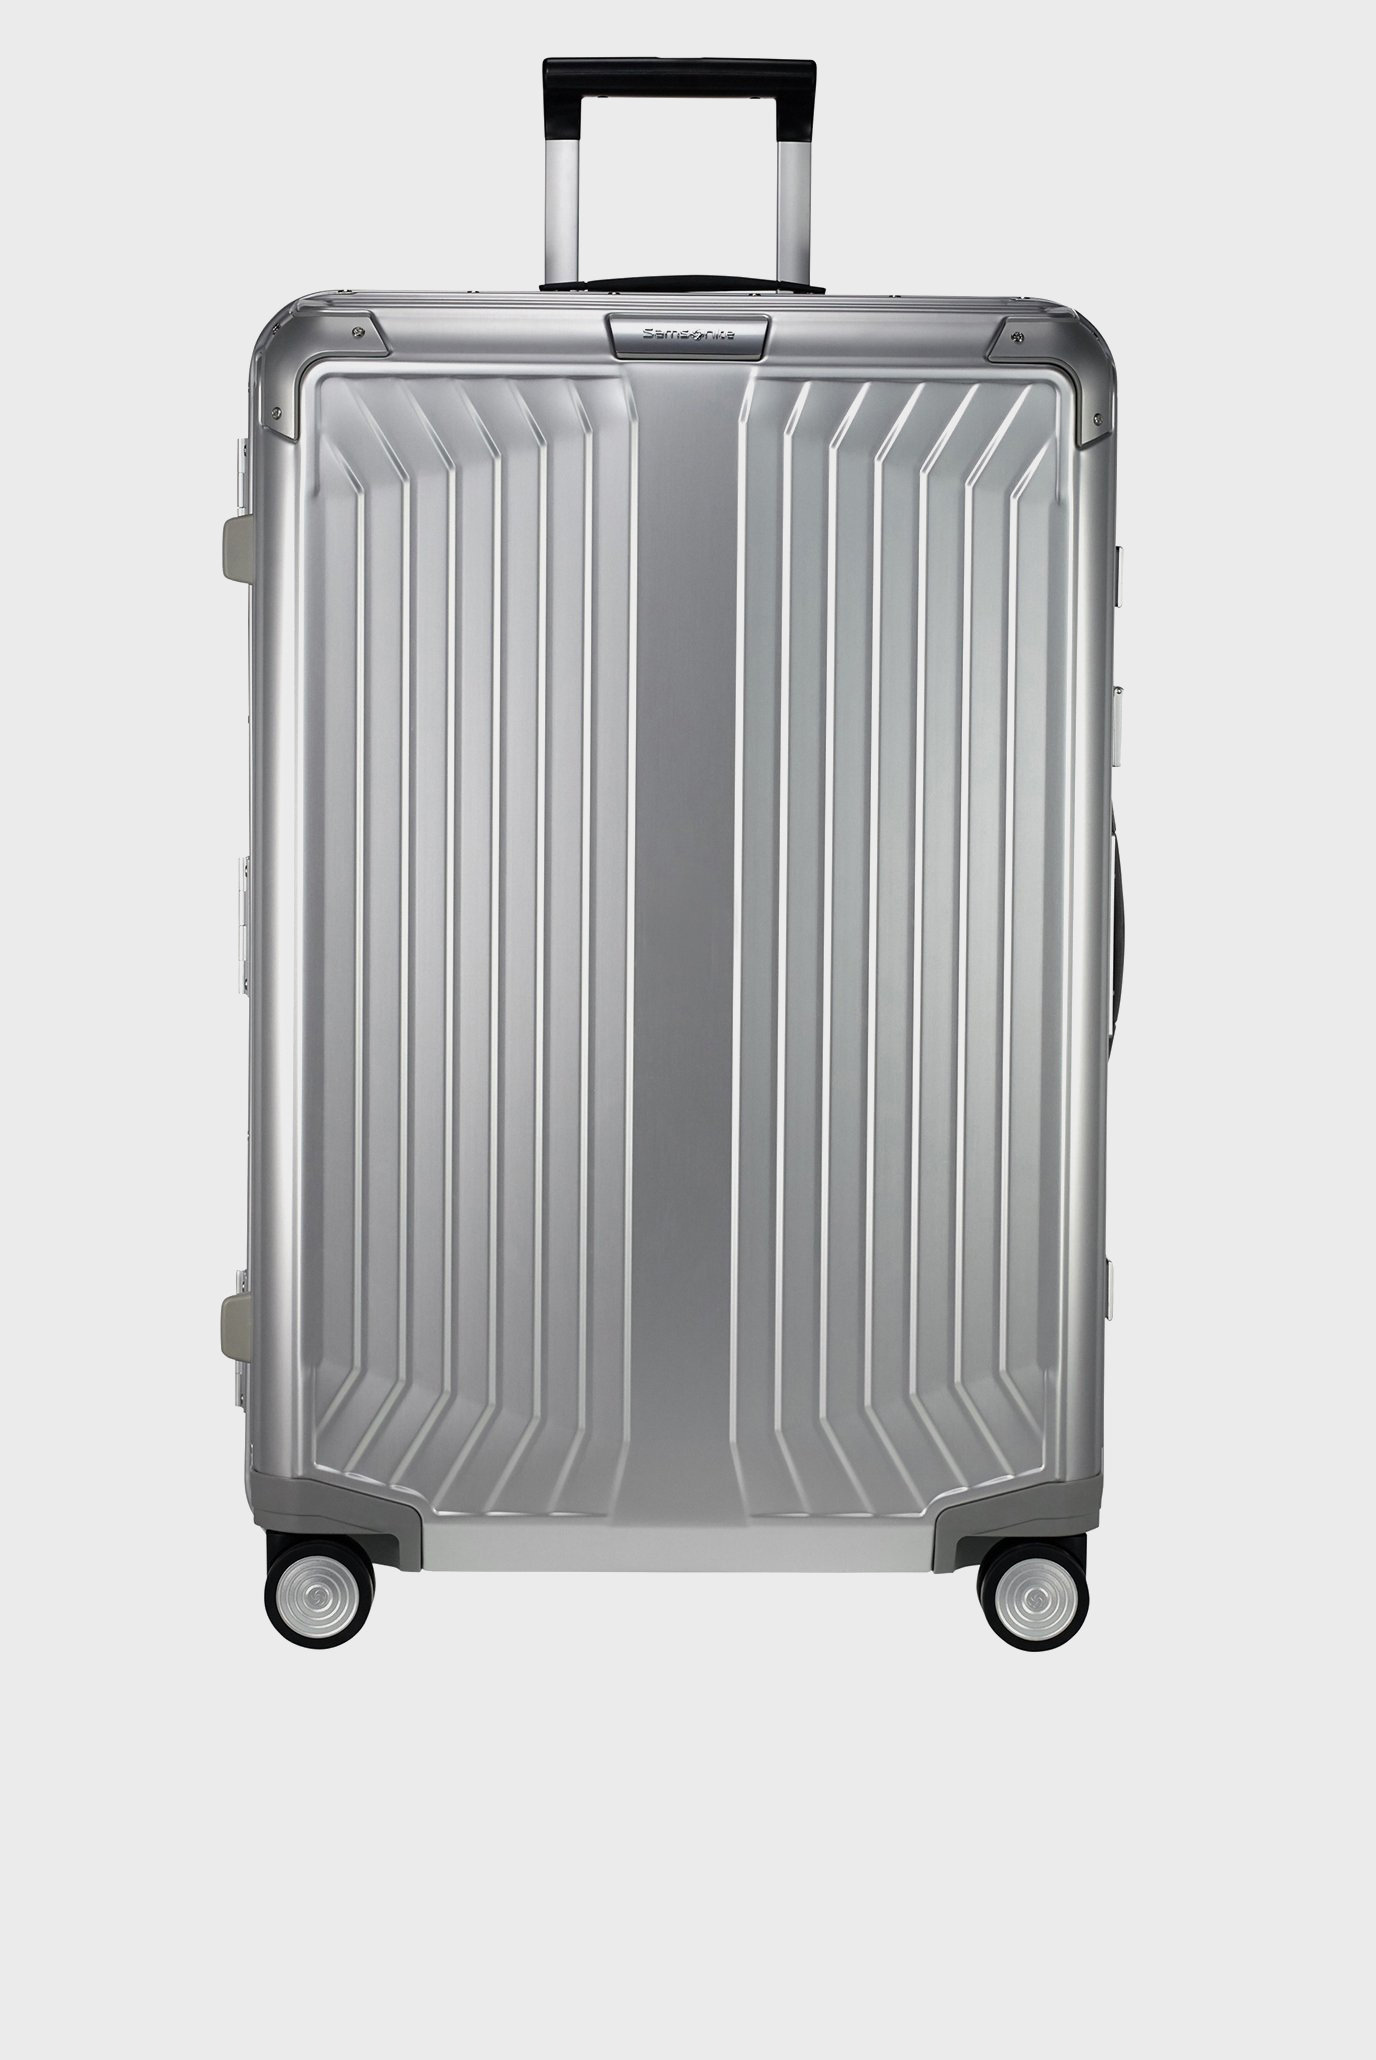 Сіра валіза 76 см LITE-BOX ALU ALUMINIUM 1